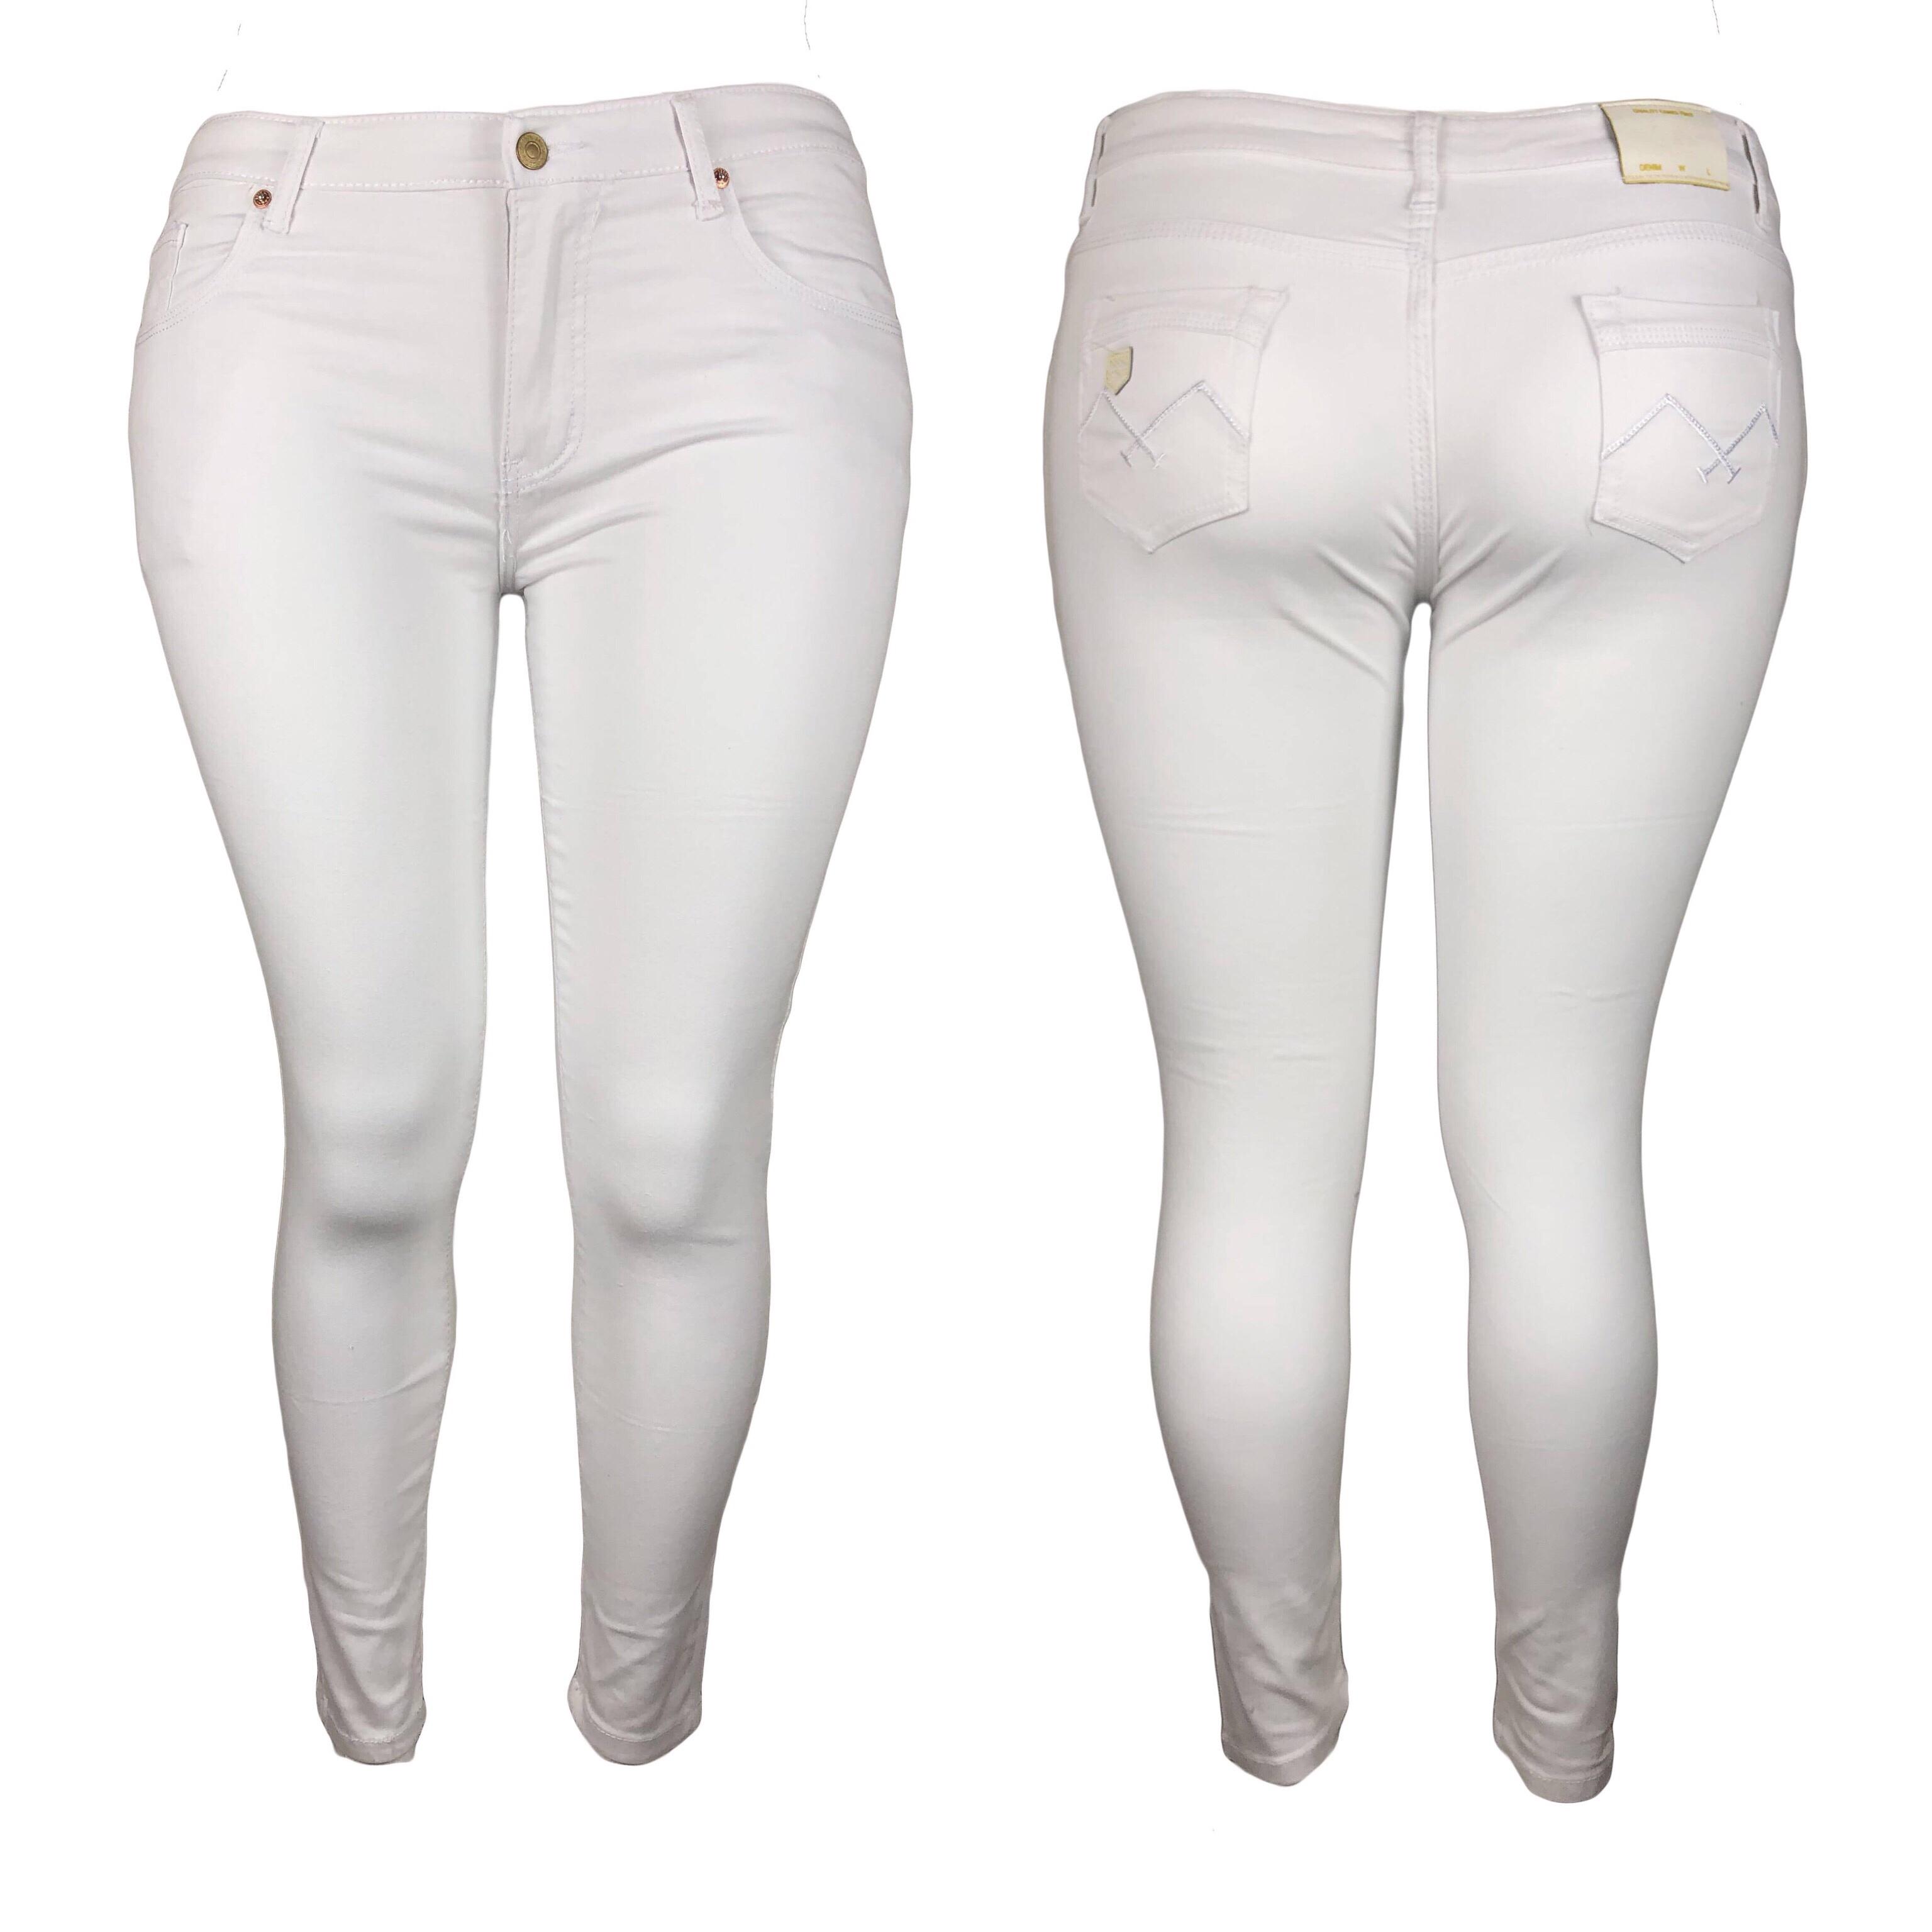 women's plus size white jeans